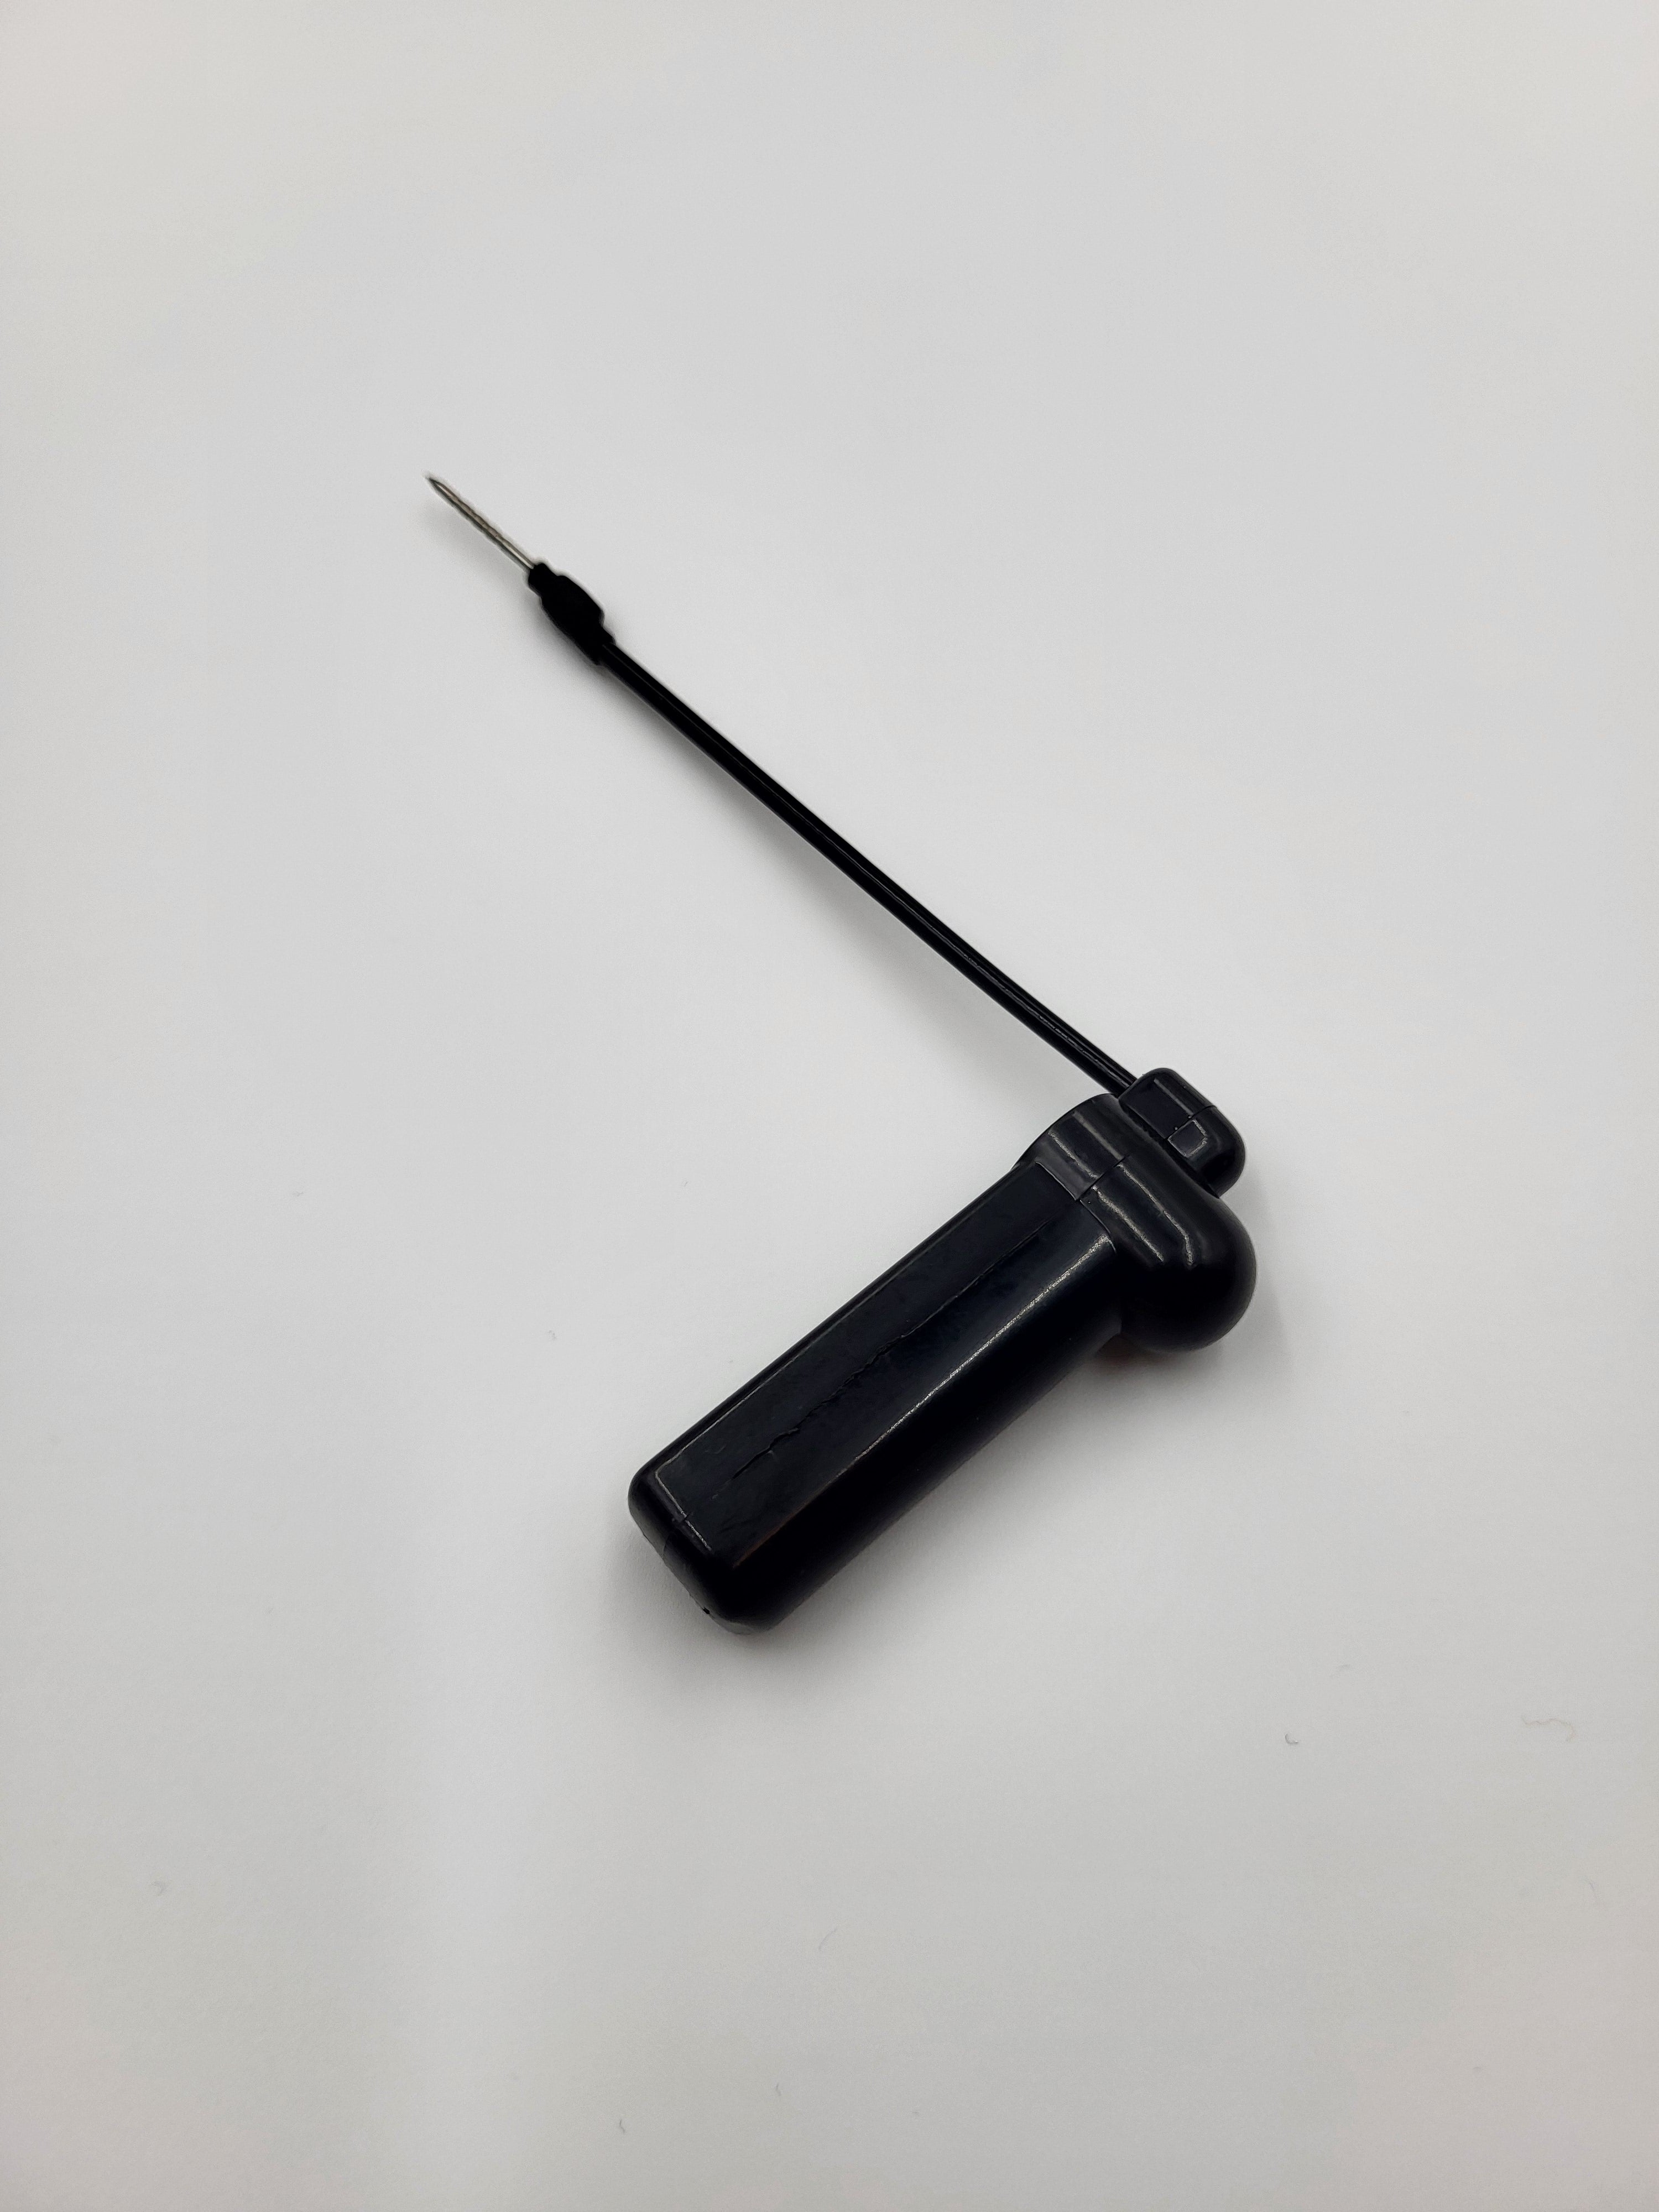 Pencil tag AM med integreret wire, 10 cm